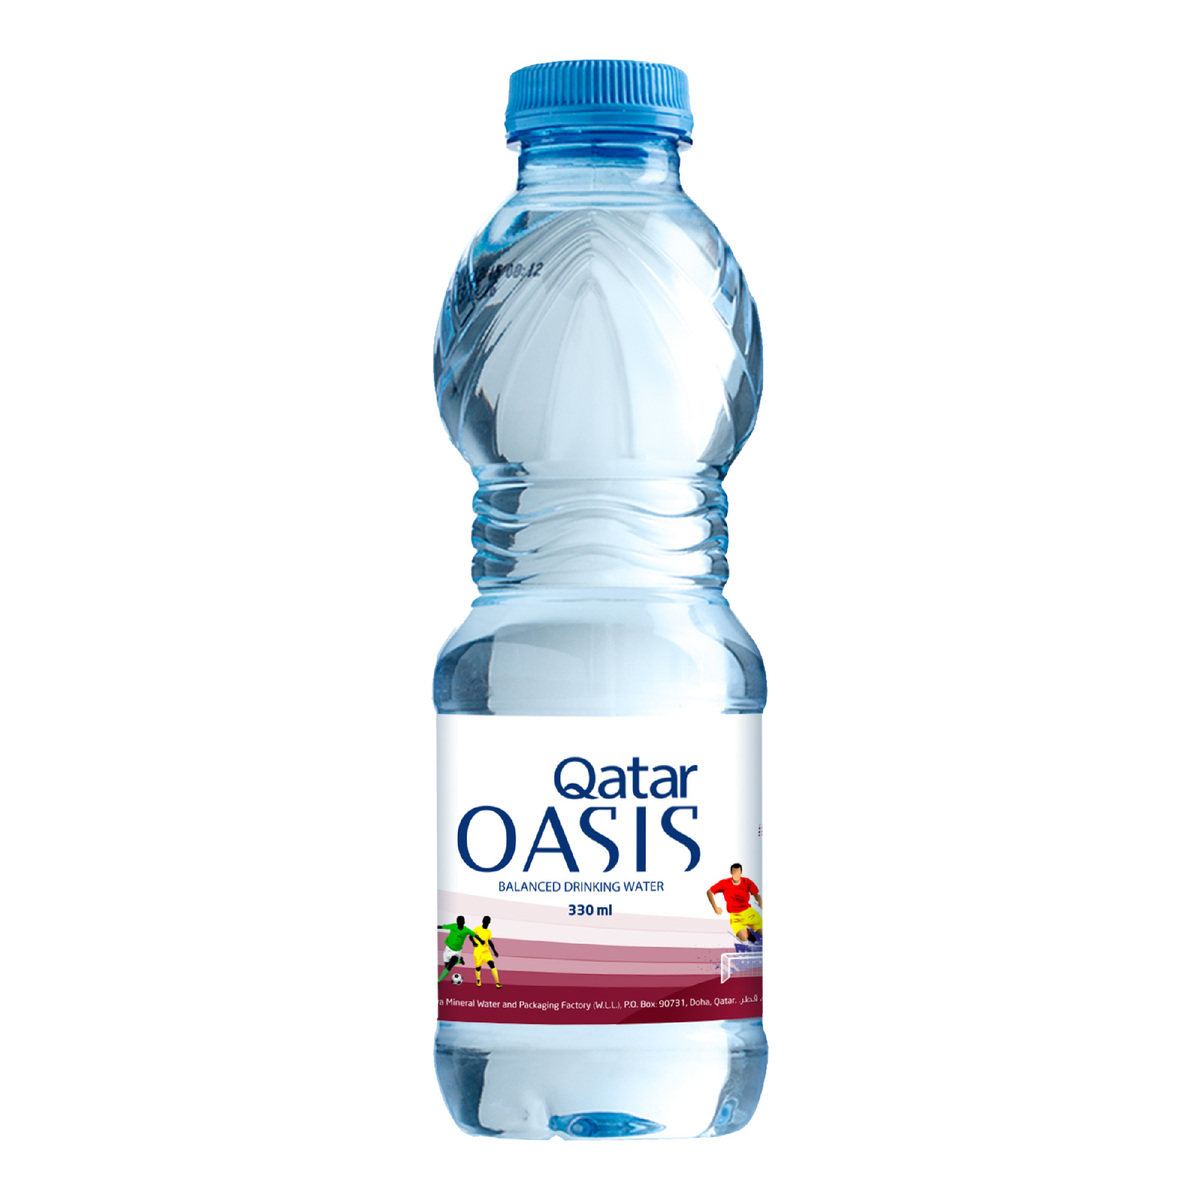 Qatar Oasis Balanced Drinking Water 12 x 330ml